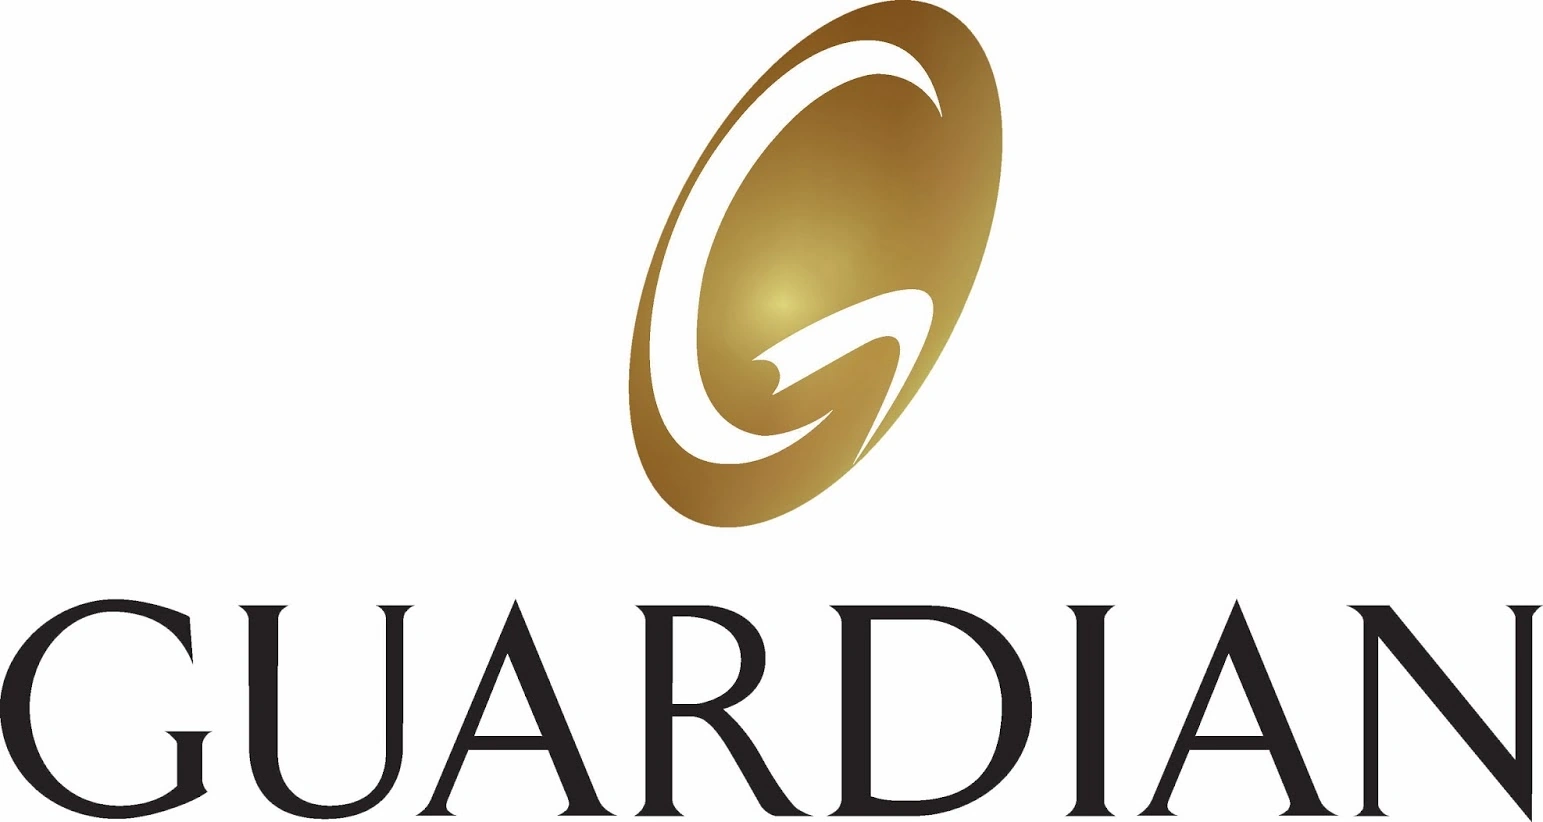 The Guardian Life Insurance